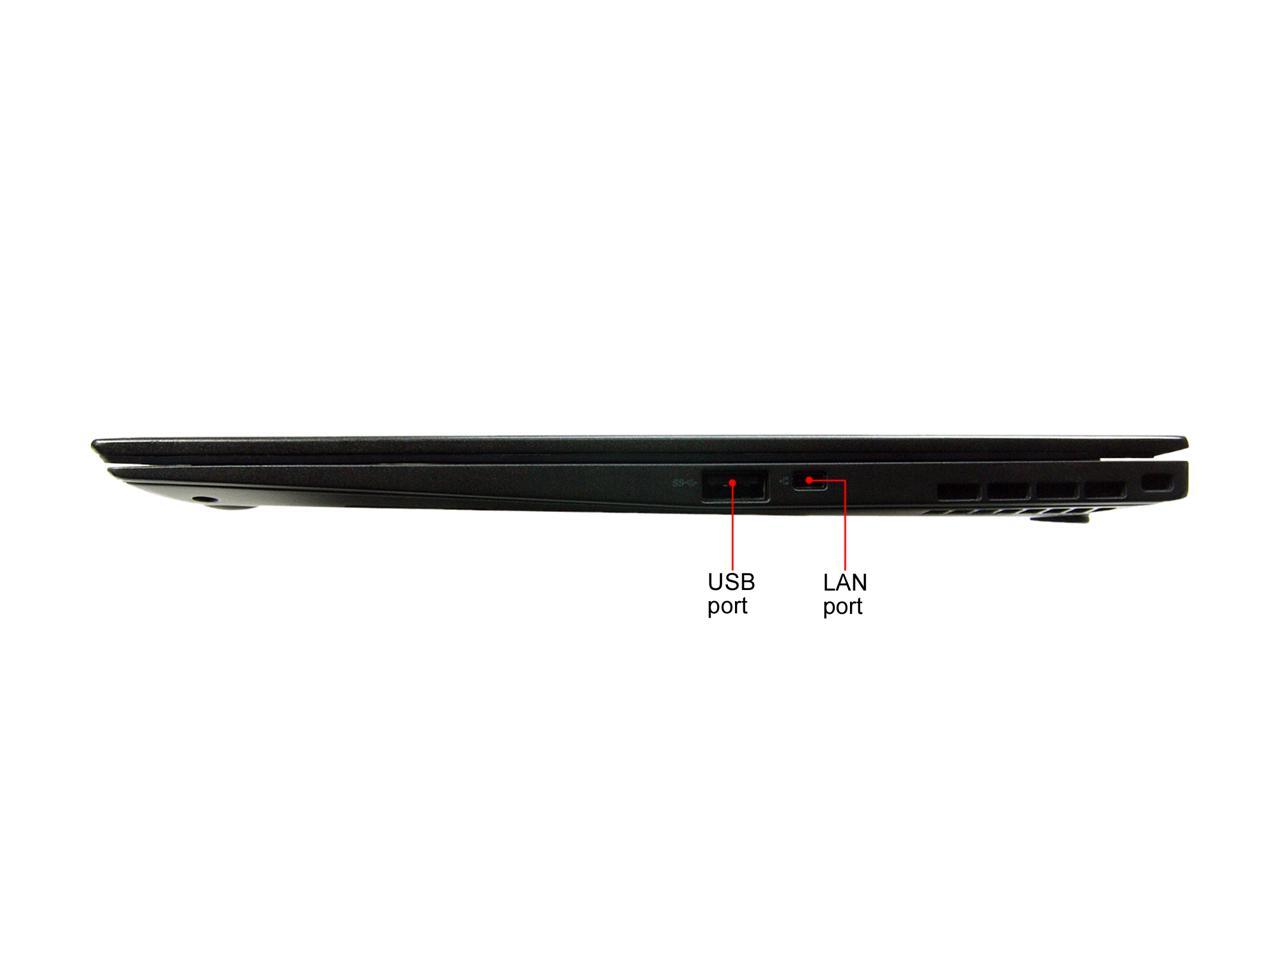 Lenovo Laptop X1 Carbon Intel Core i5 5300U (2.30 GHz) 8 GB Memory 240 SSD 14.0" Windows 10